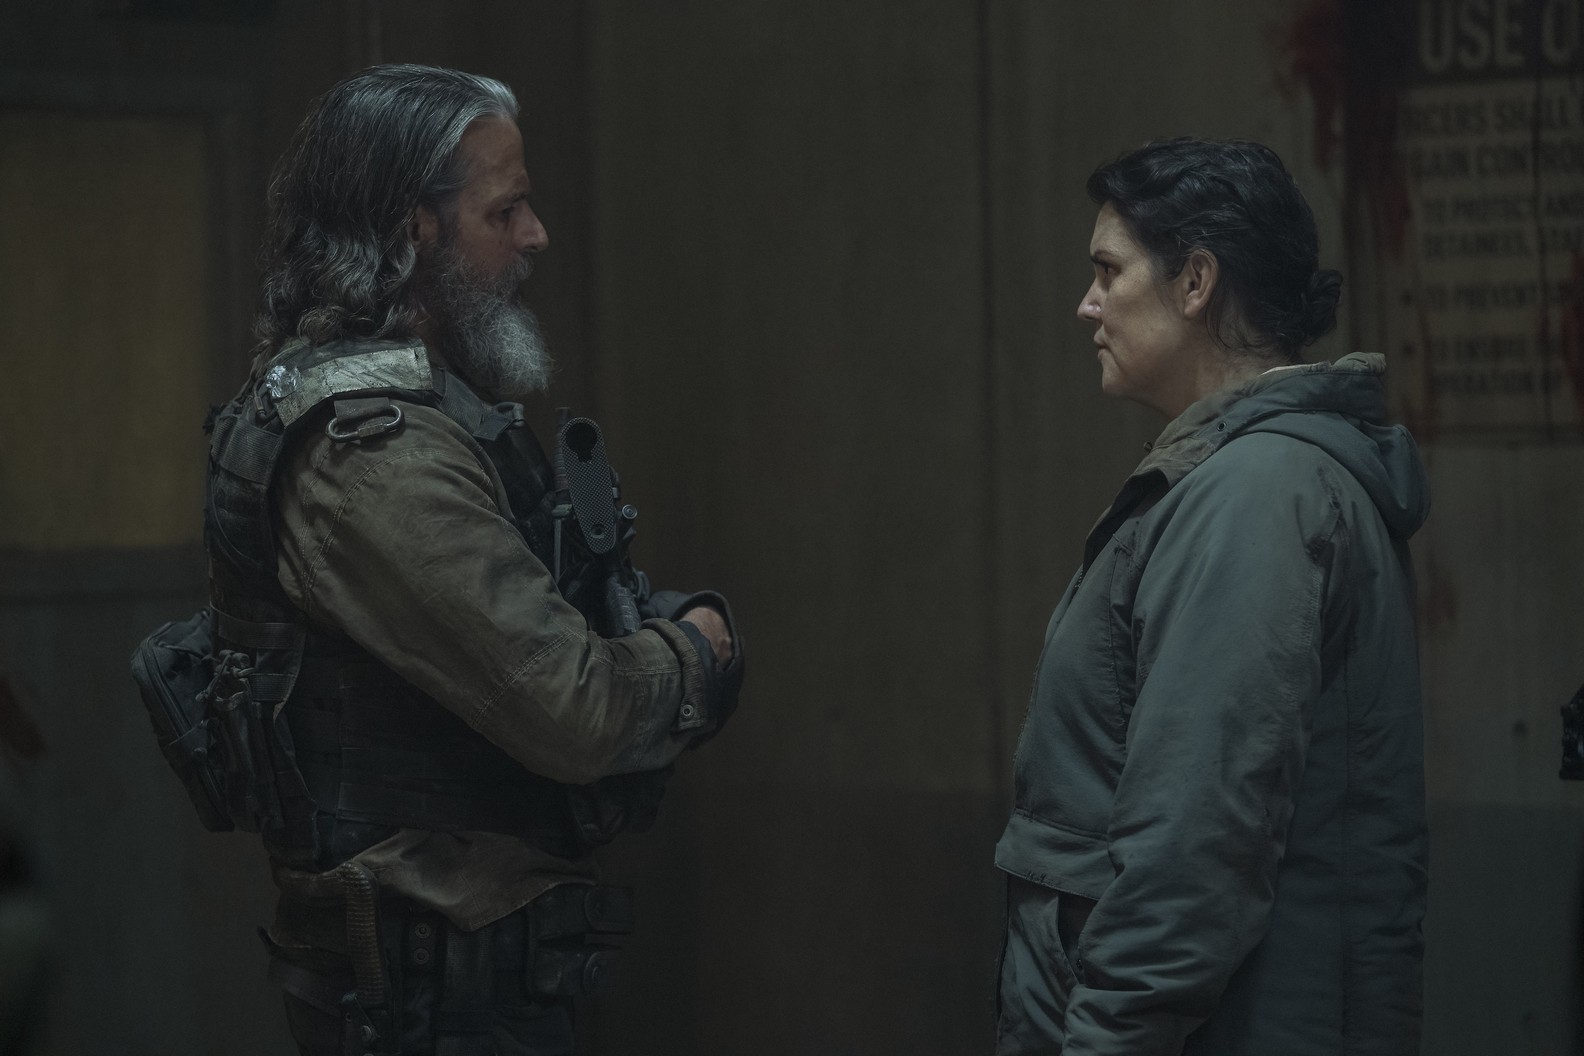 The Last Of Us' Episode 5 Recap: 'Endure And Survive